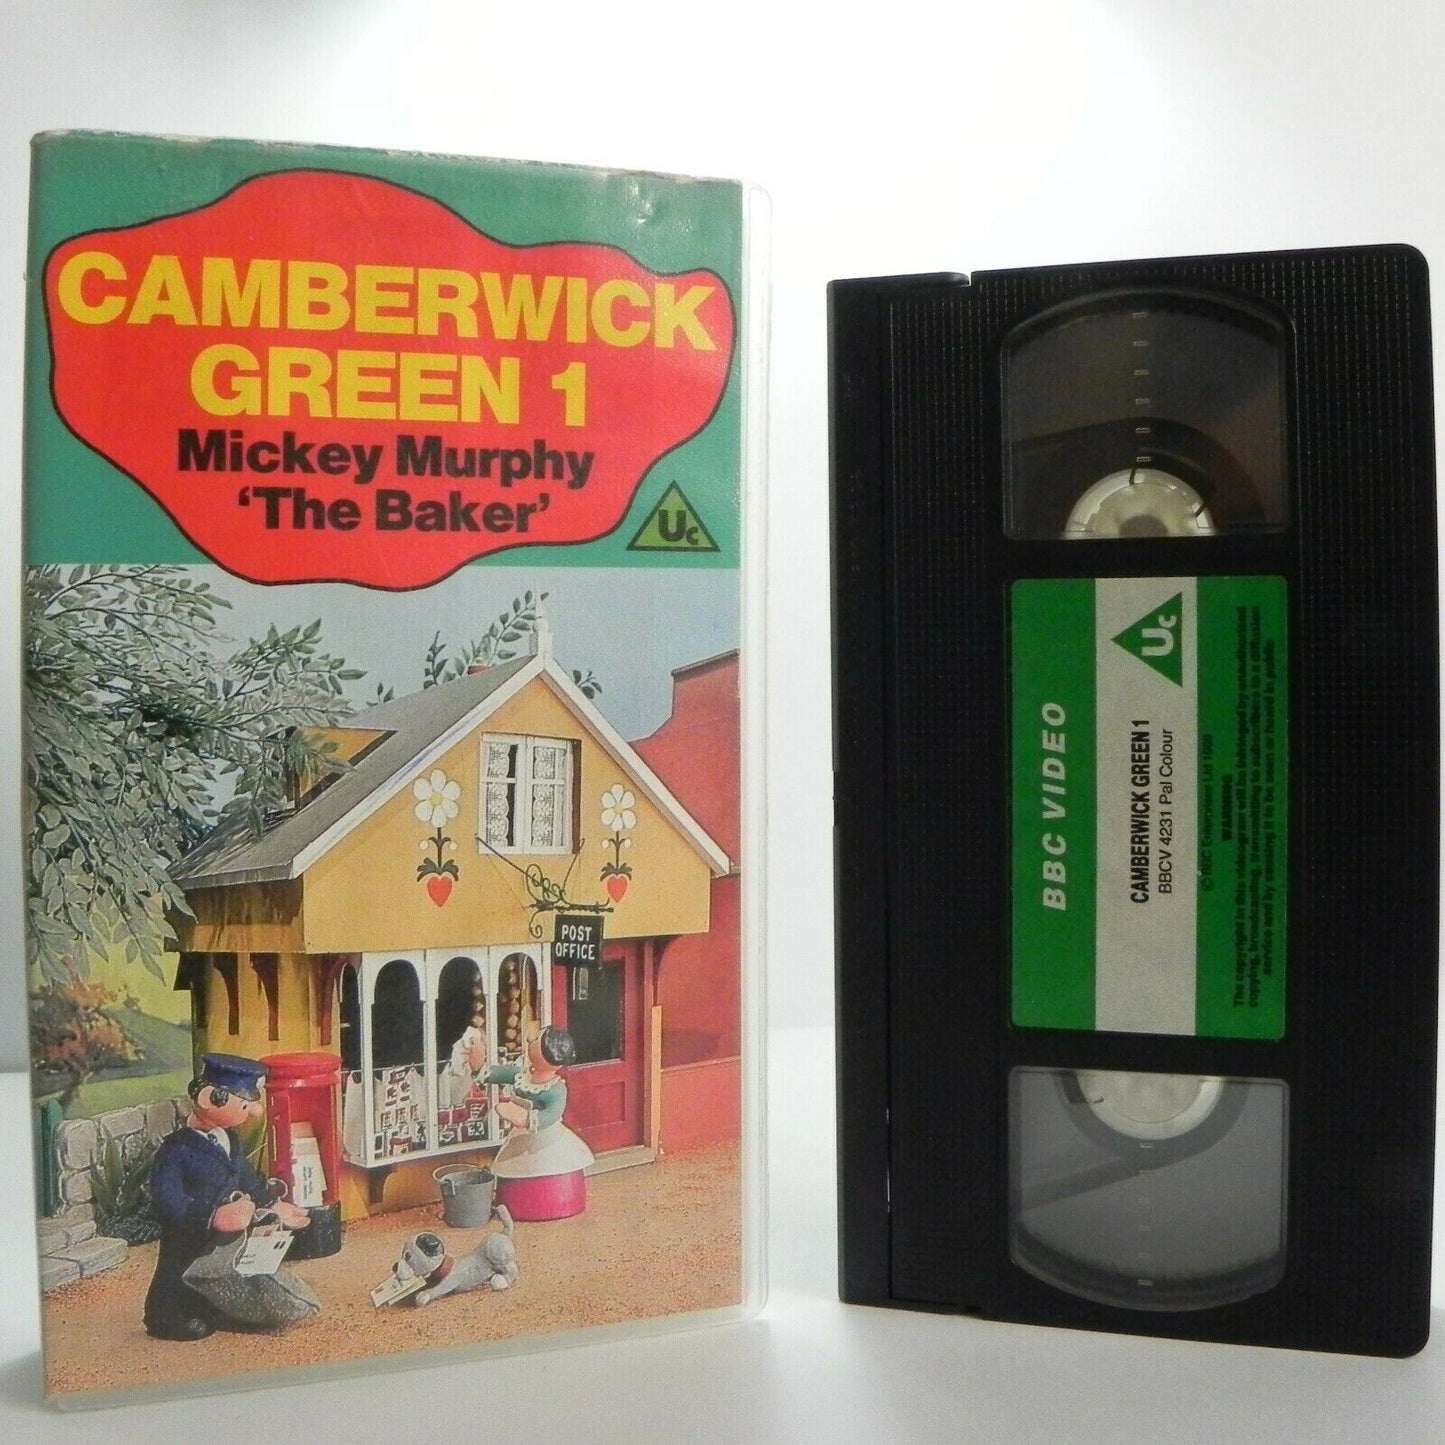 Camberwick Green 1: Mickey Murphy "The Baker" - Classic Animation - Kids - VHS-